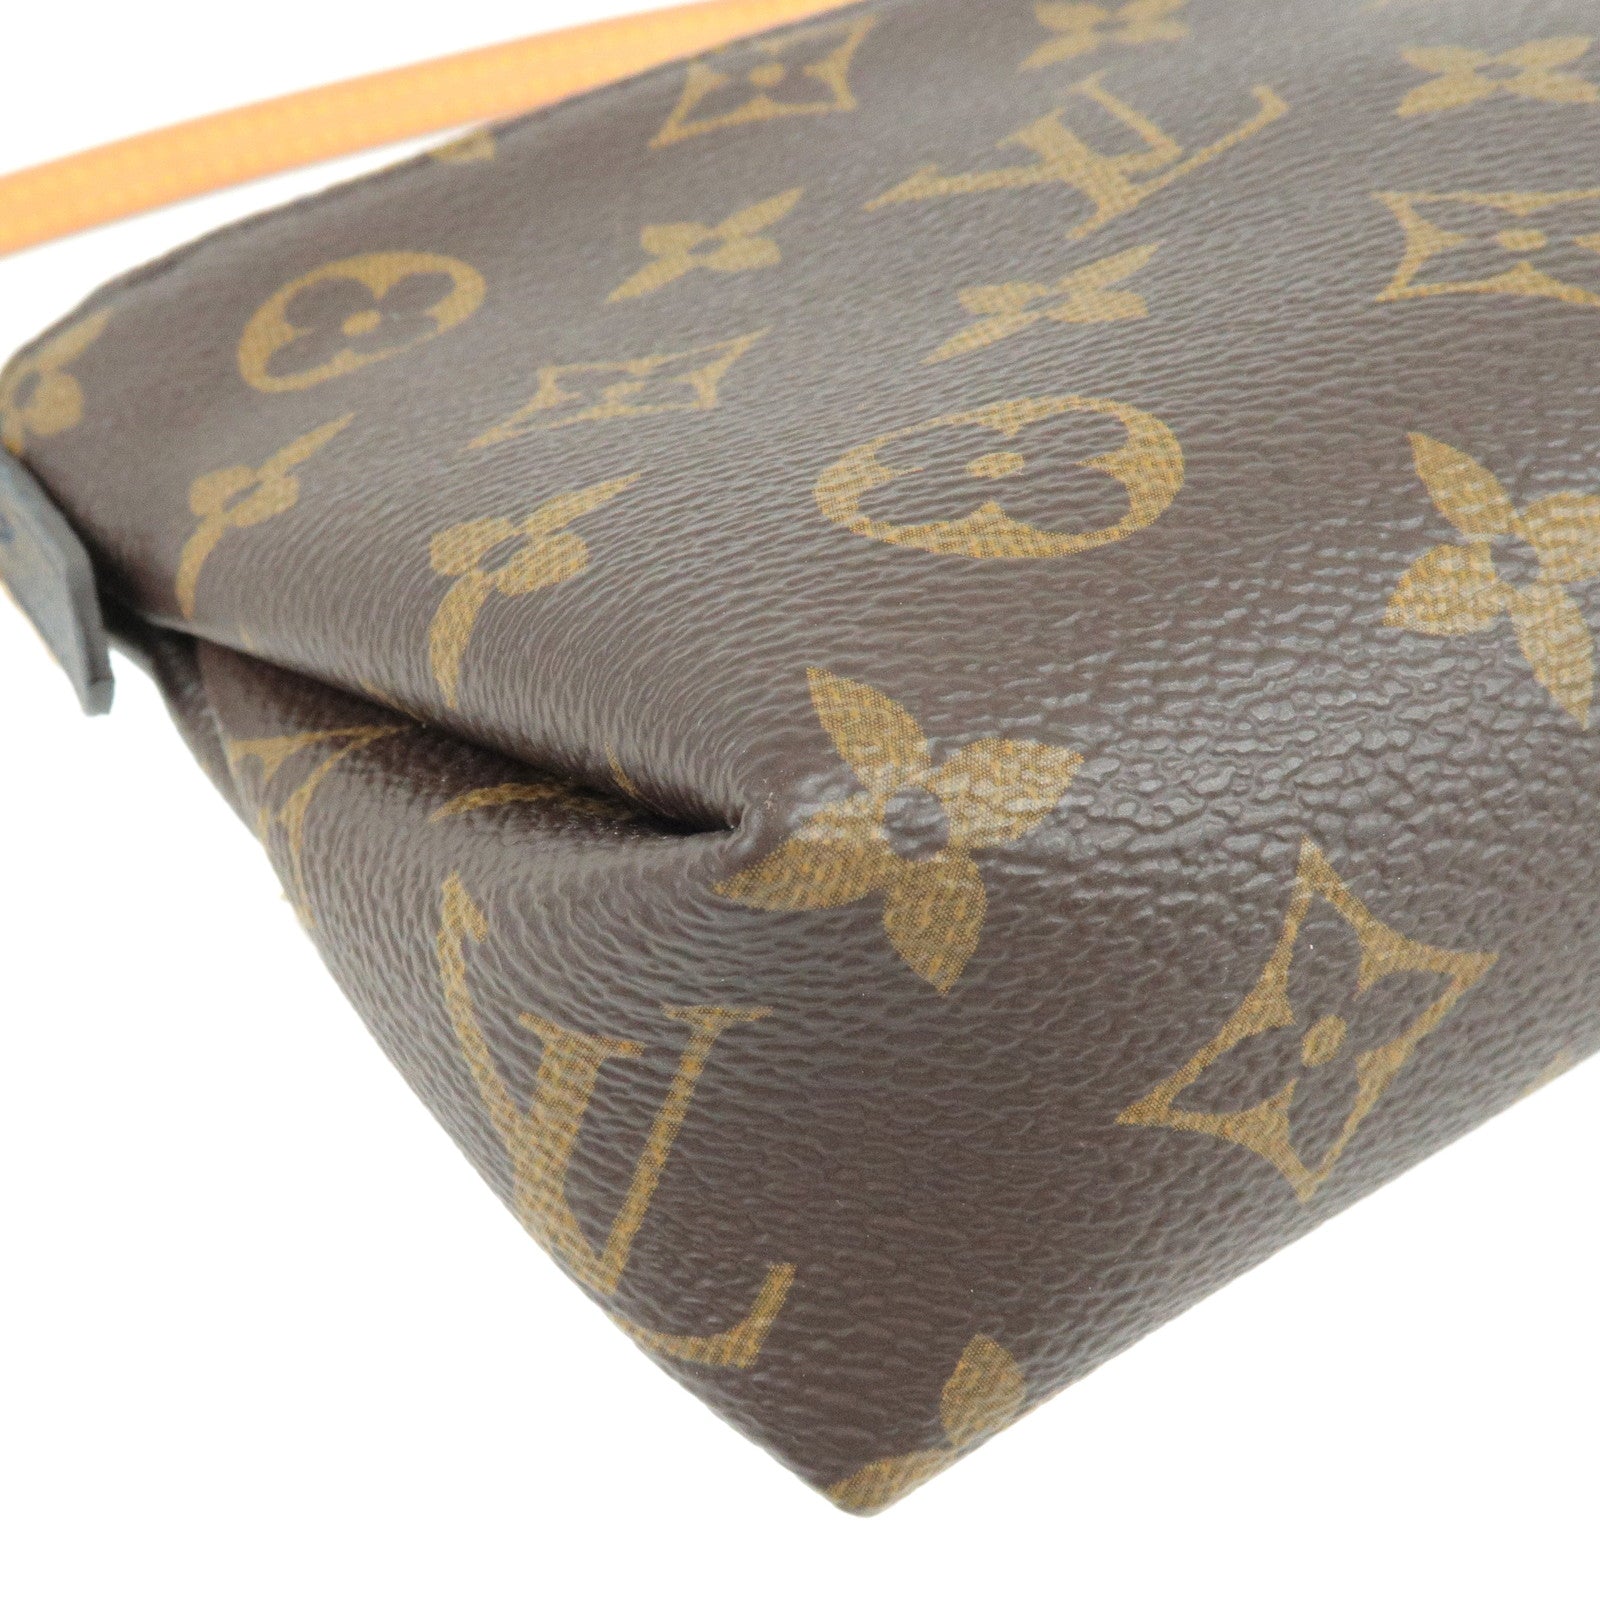 Monogram Cluny Mini - Leather Handbag for Women